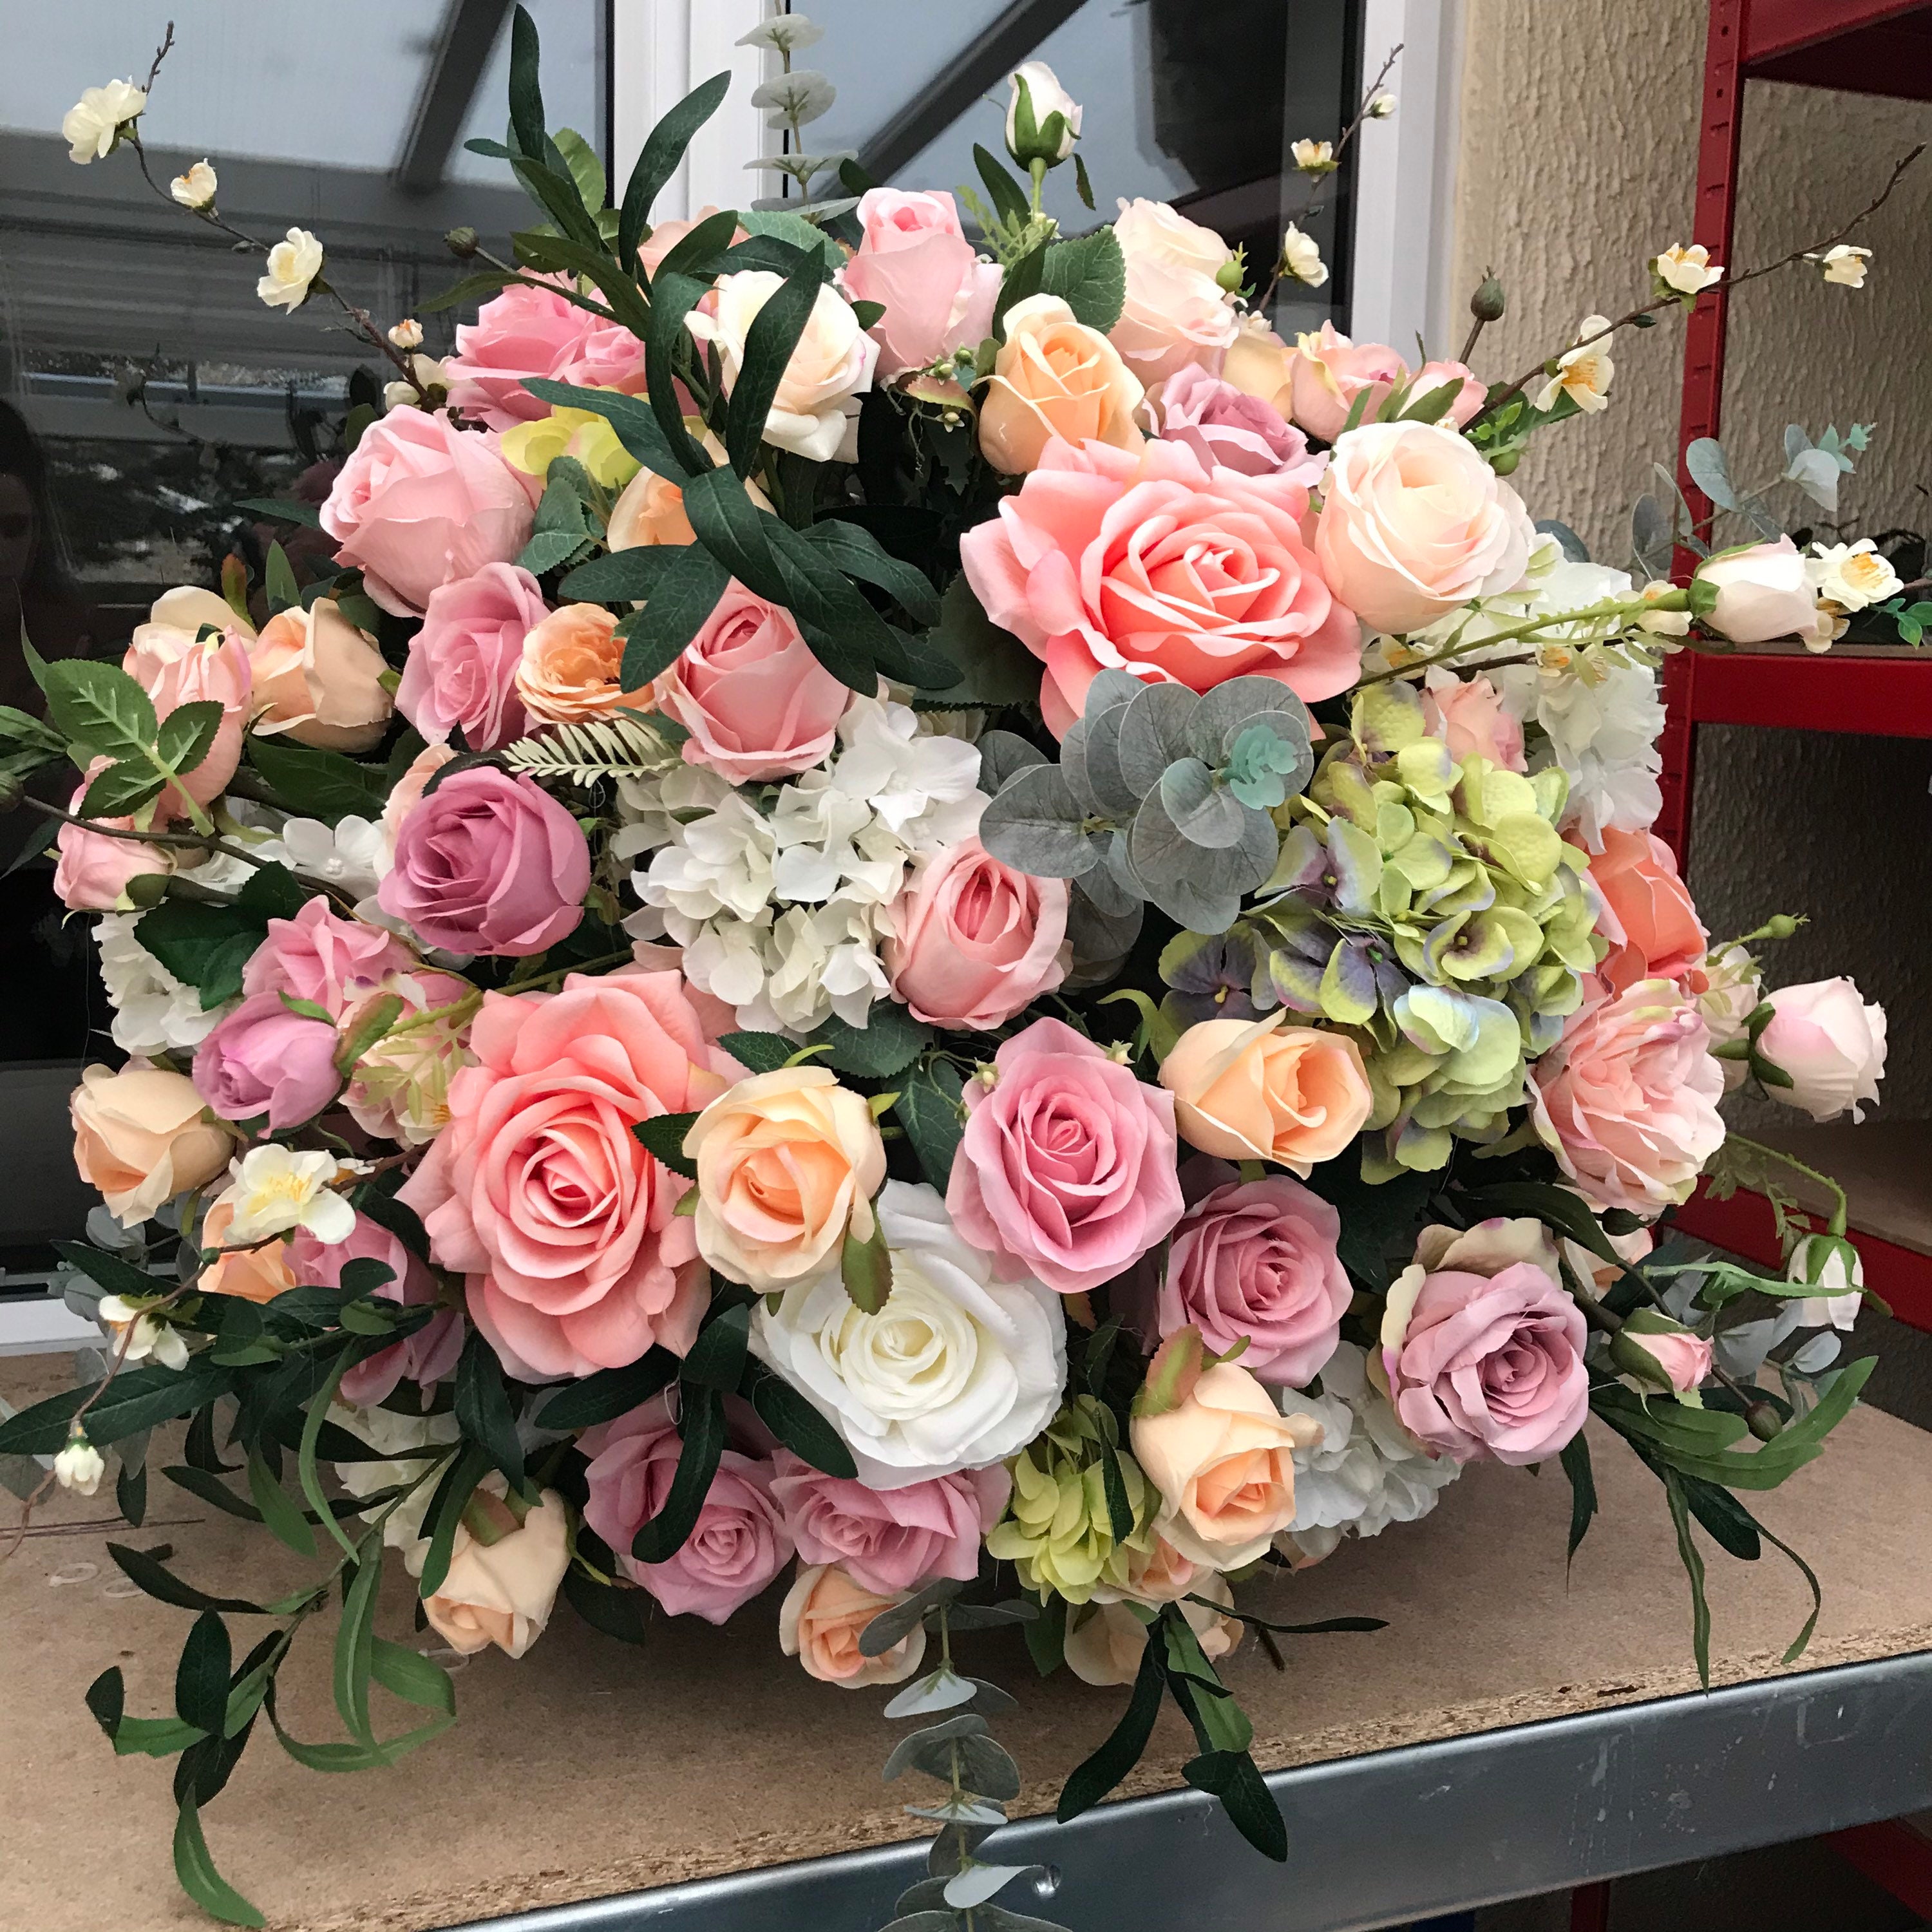 Luxe Flower Centrepiece, Floral Wedding Centrepiece, Large Silk Flower Ball, Table Vase